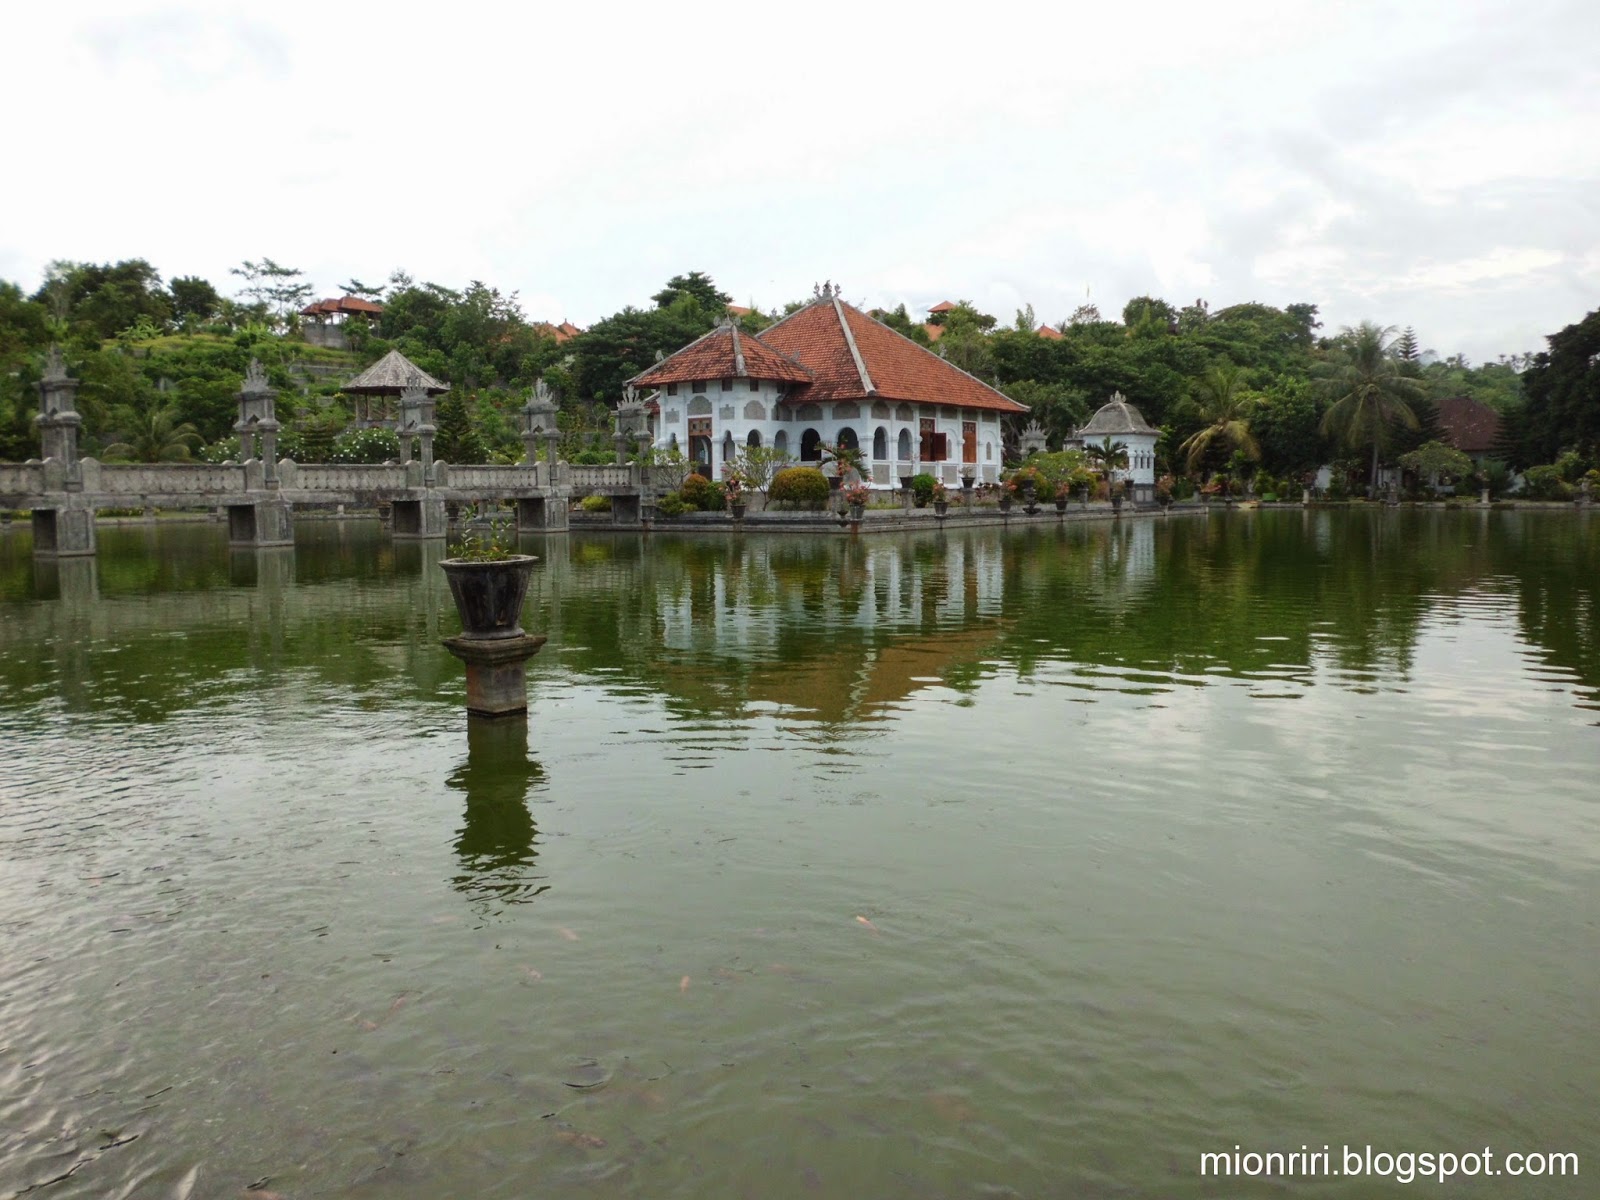 Mionriri Vacation to Bali  Day 1 Taman Ujung Floating  